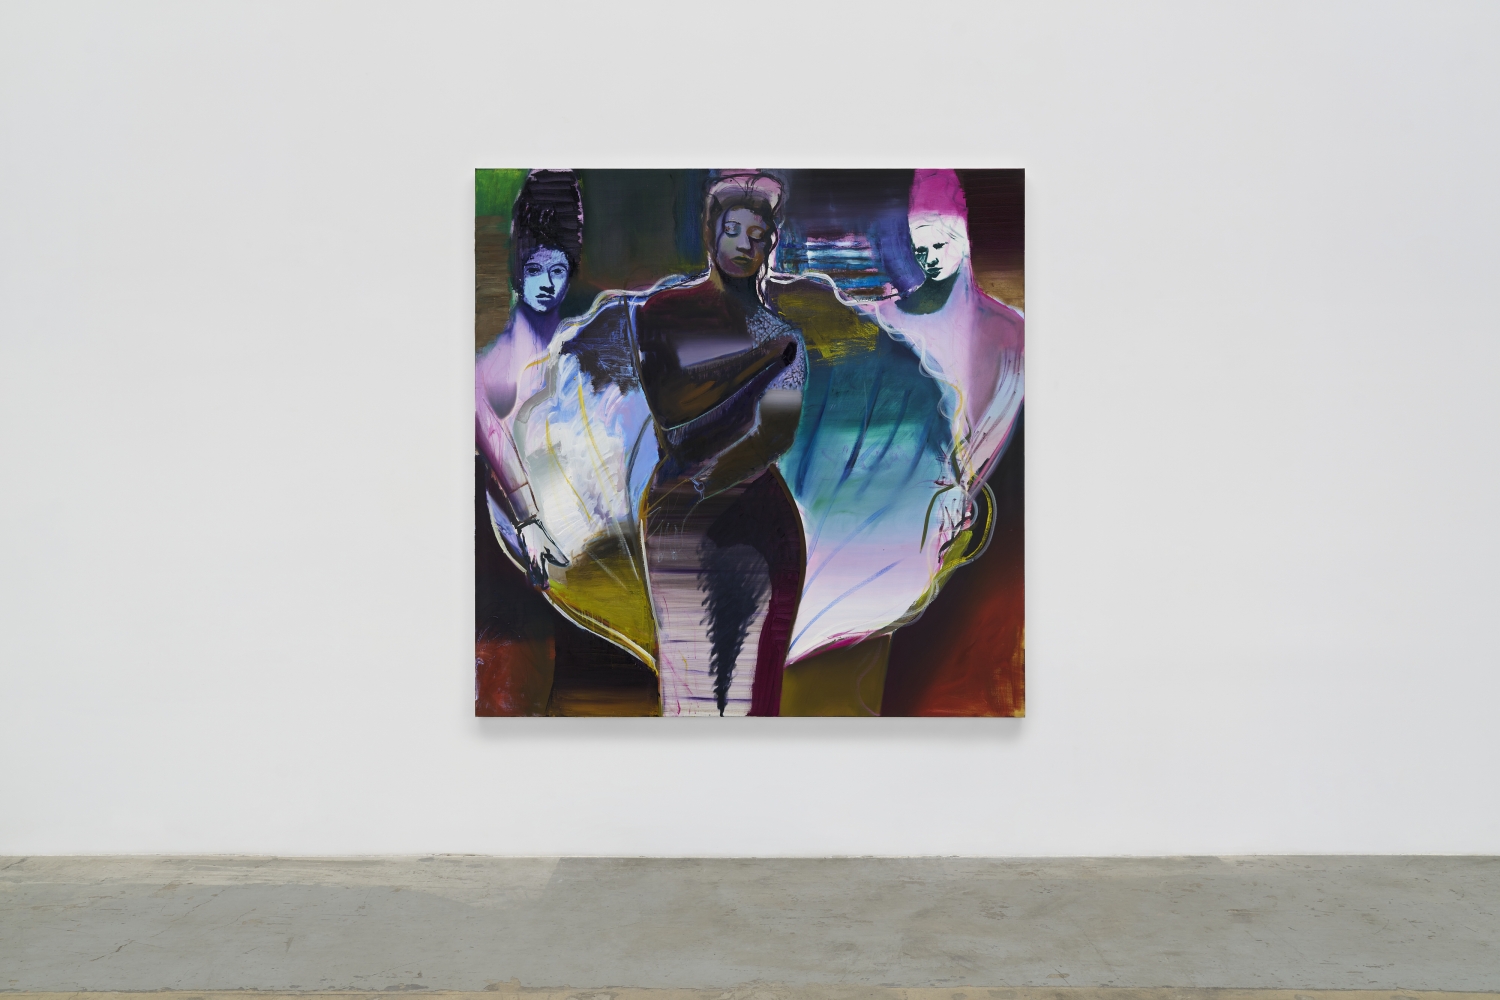 Katherina&amp;nbsp;Olschbaur
The Gift, 2021
oil on canvas
78.75 x 78.75 in
200 x 200 cm